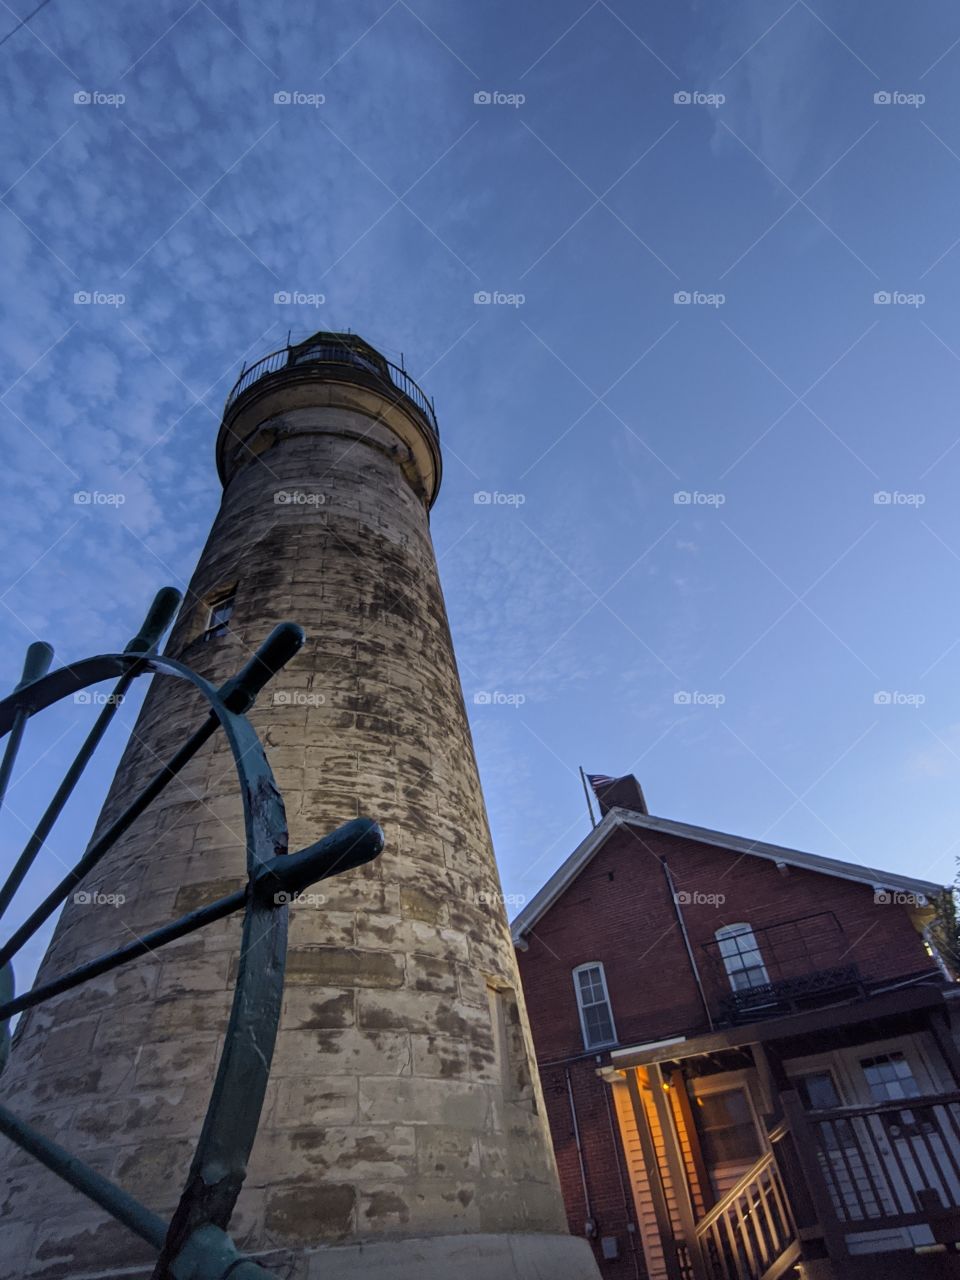 Grand River Lighthouse in Fairport Harbor, Ohio on Lake Erie